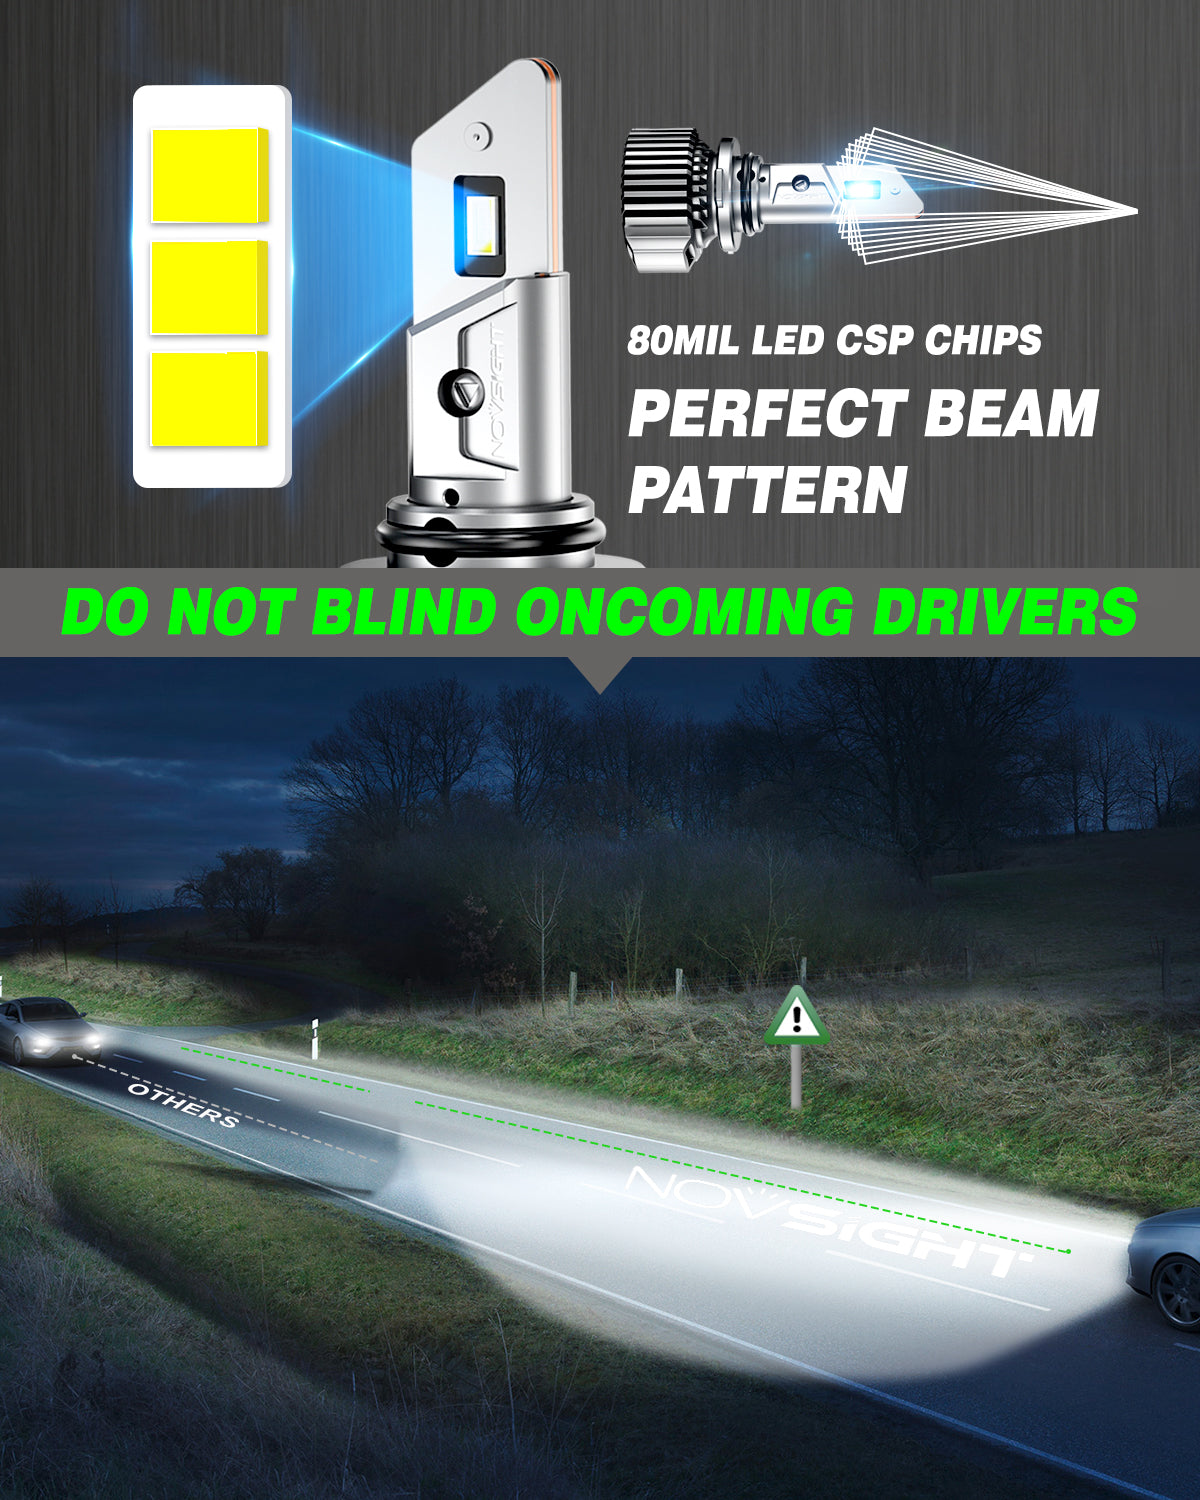 2015-2020 Chevrolet Colorado Custom-Fit LED Headlight Bulbs 9005 H11 Halogen Conversion Kits - NOVSIGHT